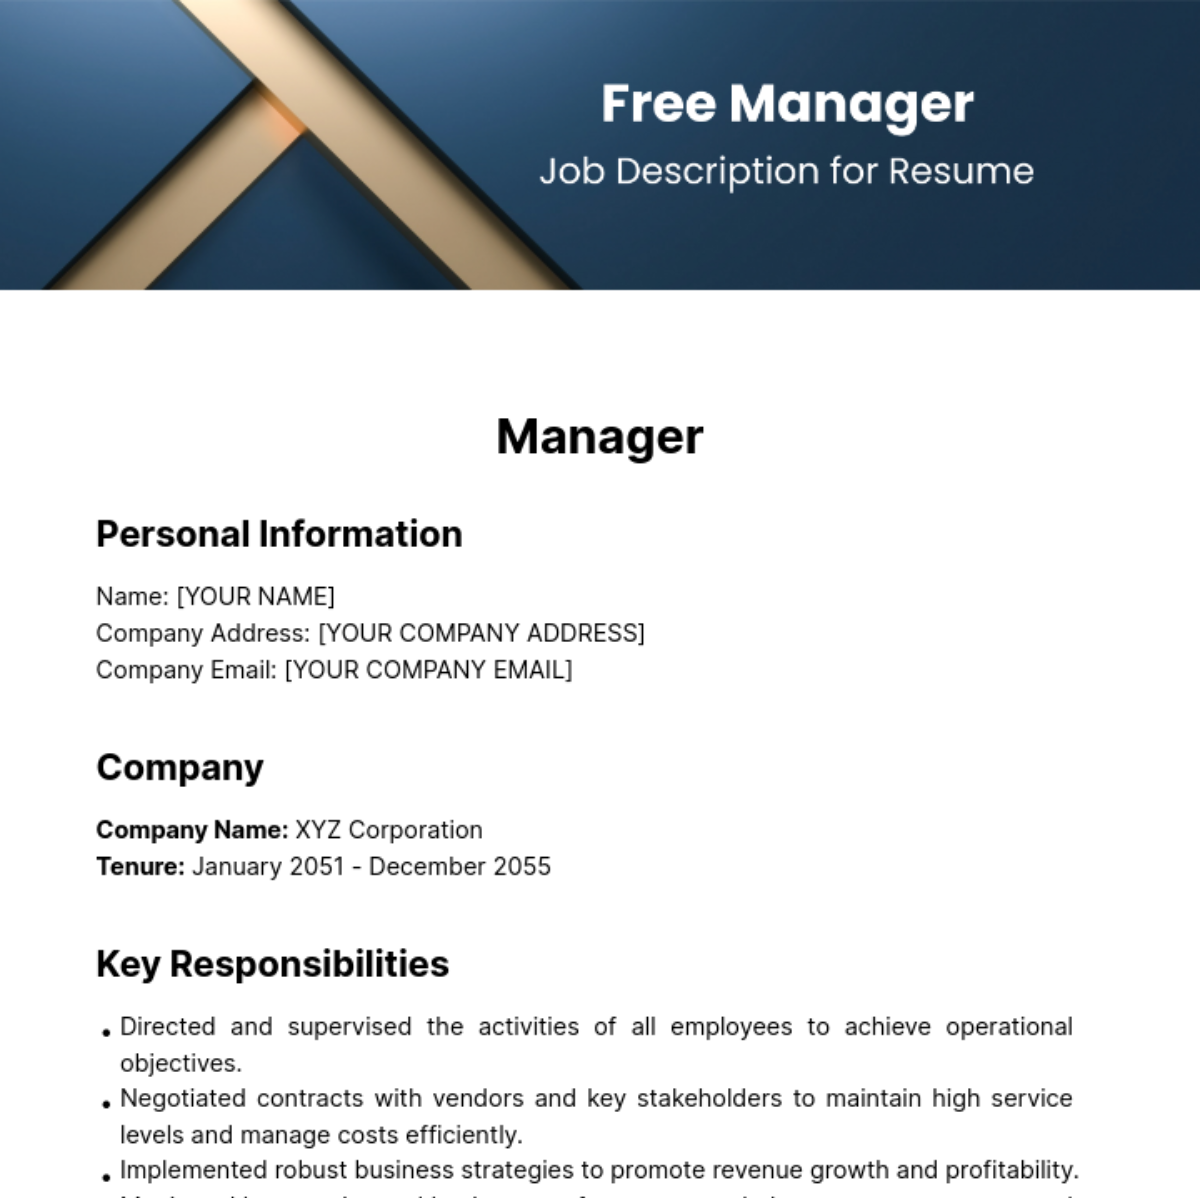 Manager Job Description for Resume Template